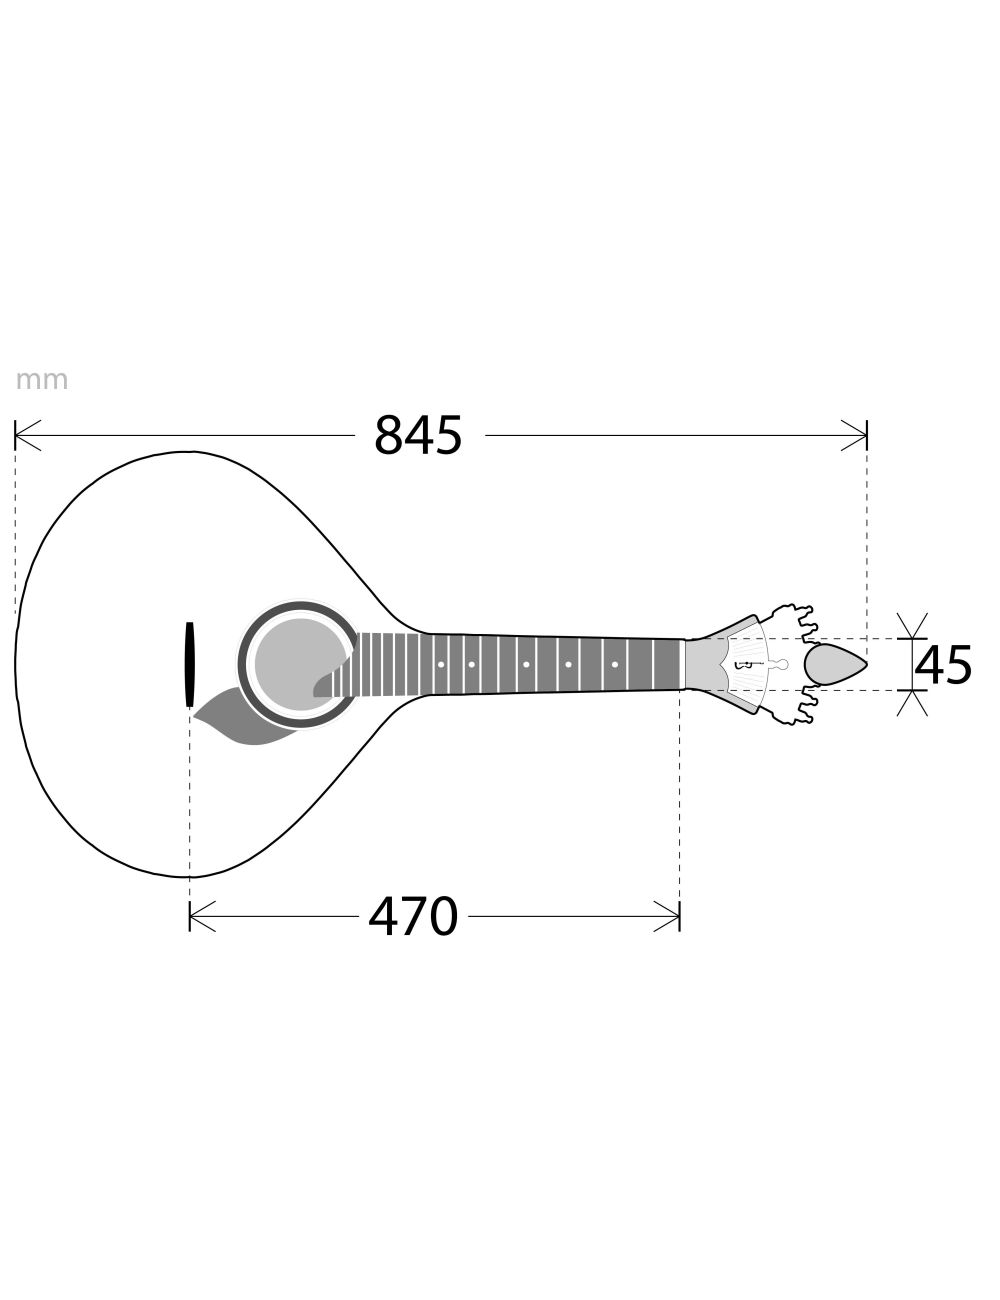 APC 305-LS portugiesische Gitarre